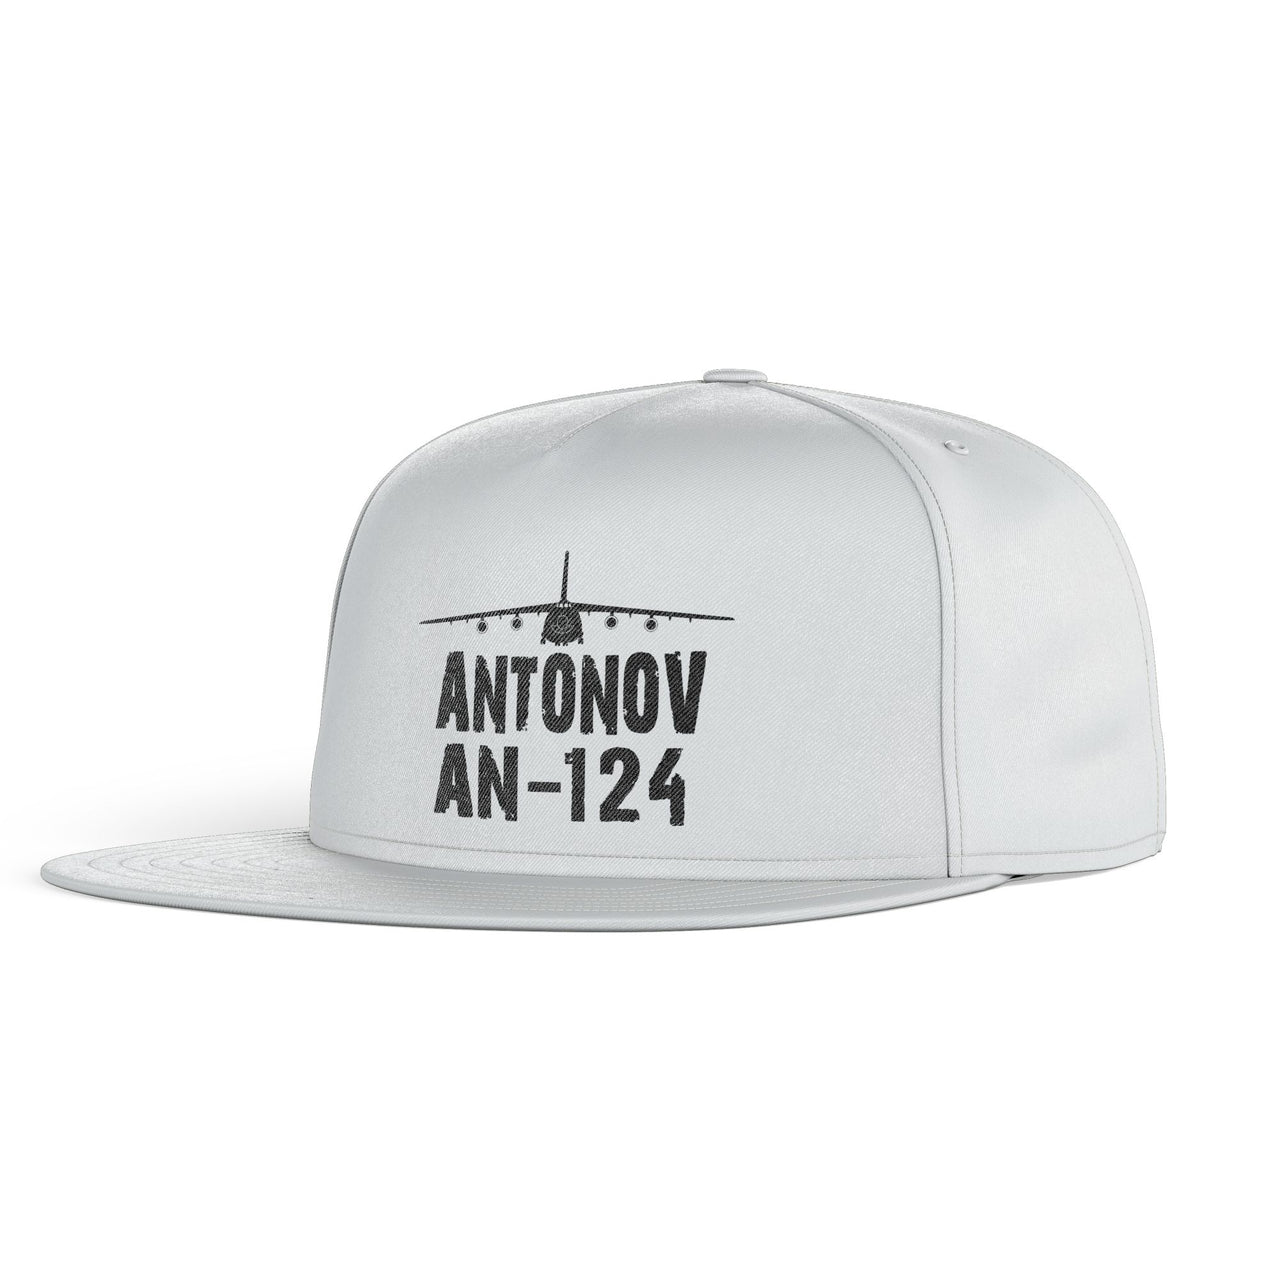 Antonov AN-124 & Plane Designed Snapback Caps & Hats